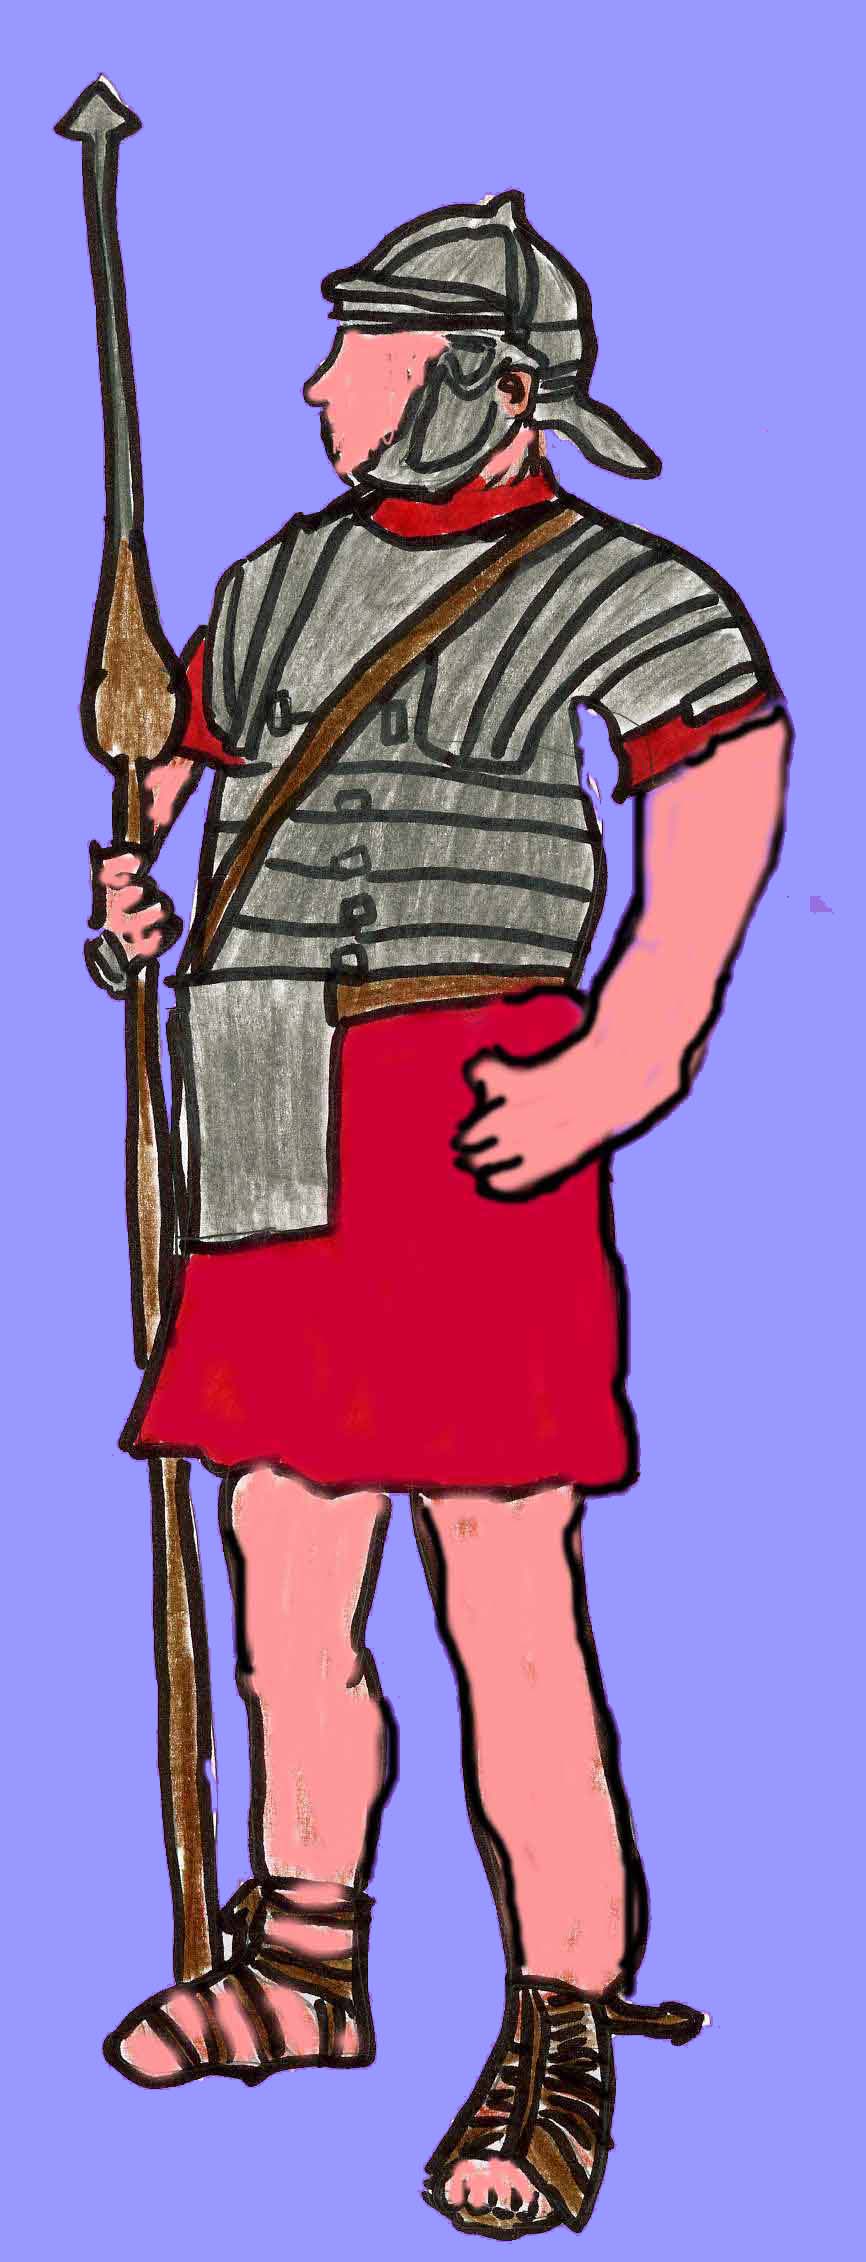 Image: Roman Soldier